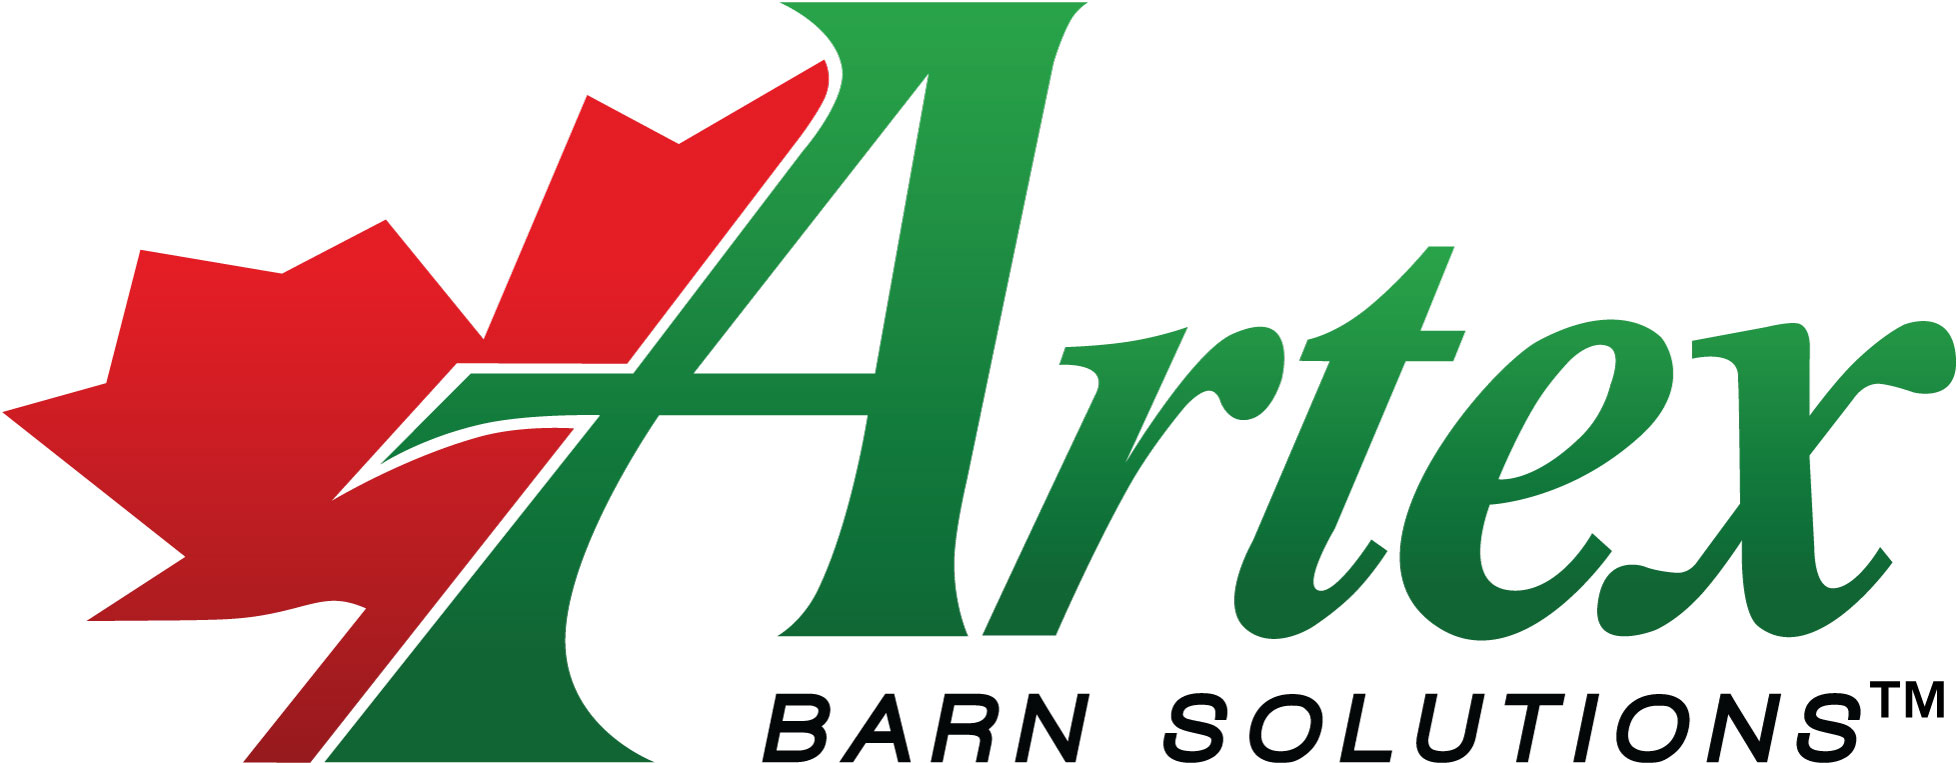 Artex Logo